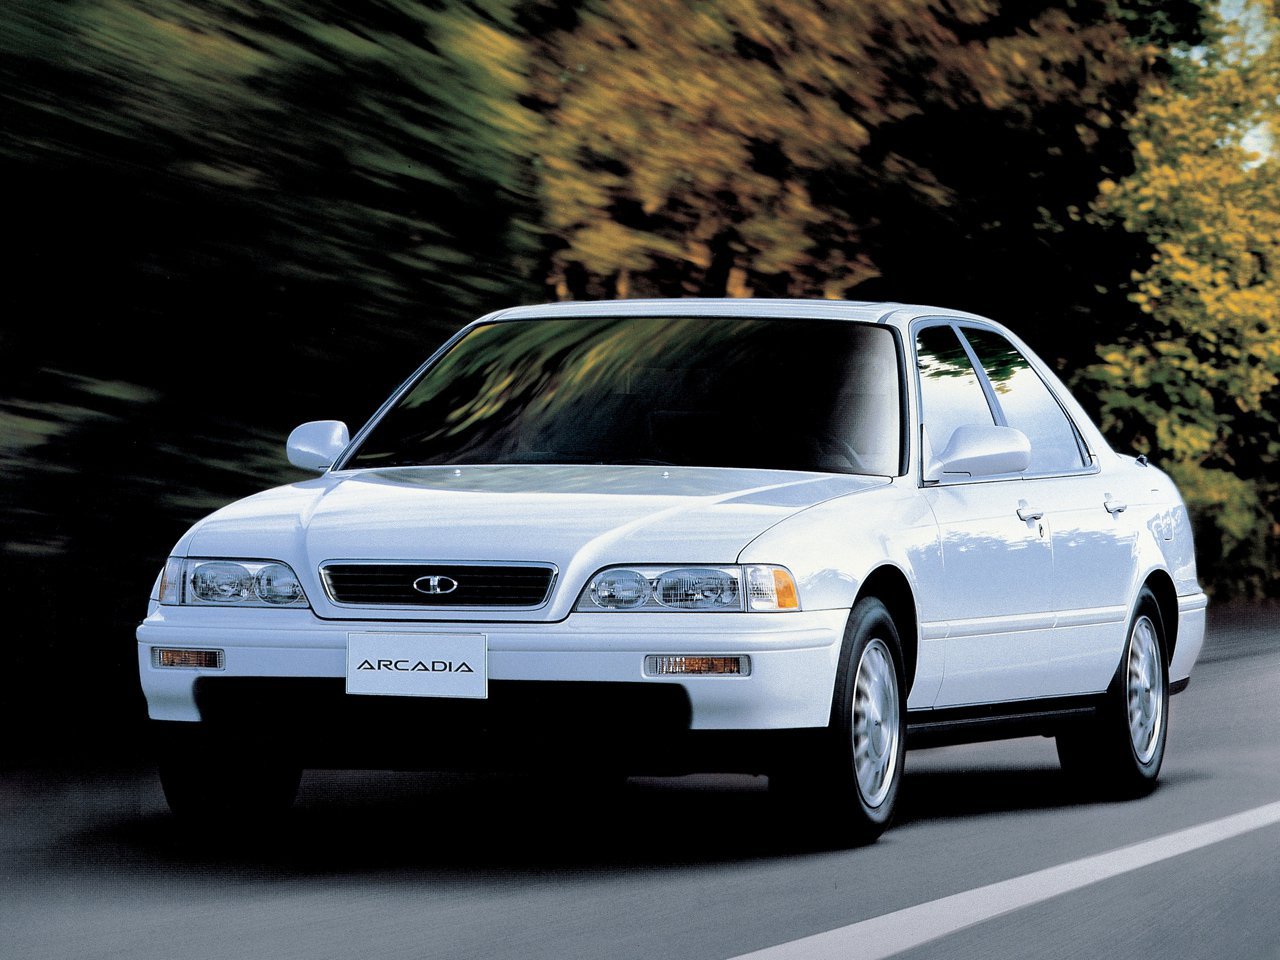 седан Daewoo Arcadia 1993 - 2000г выпуска модификация 3.2 AT (220 л.с.)